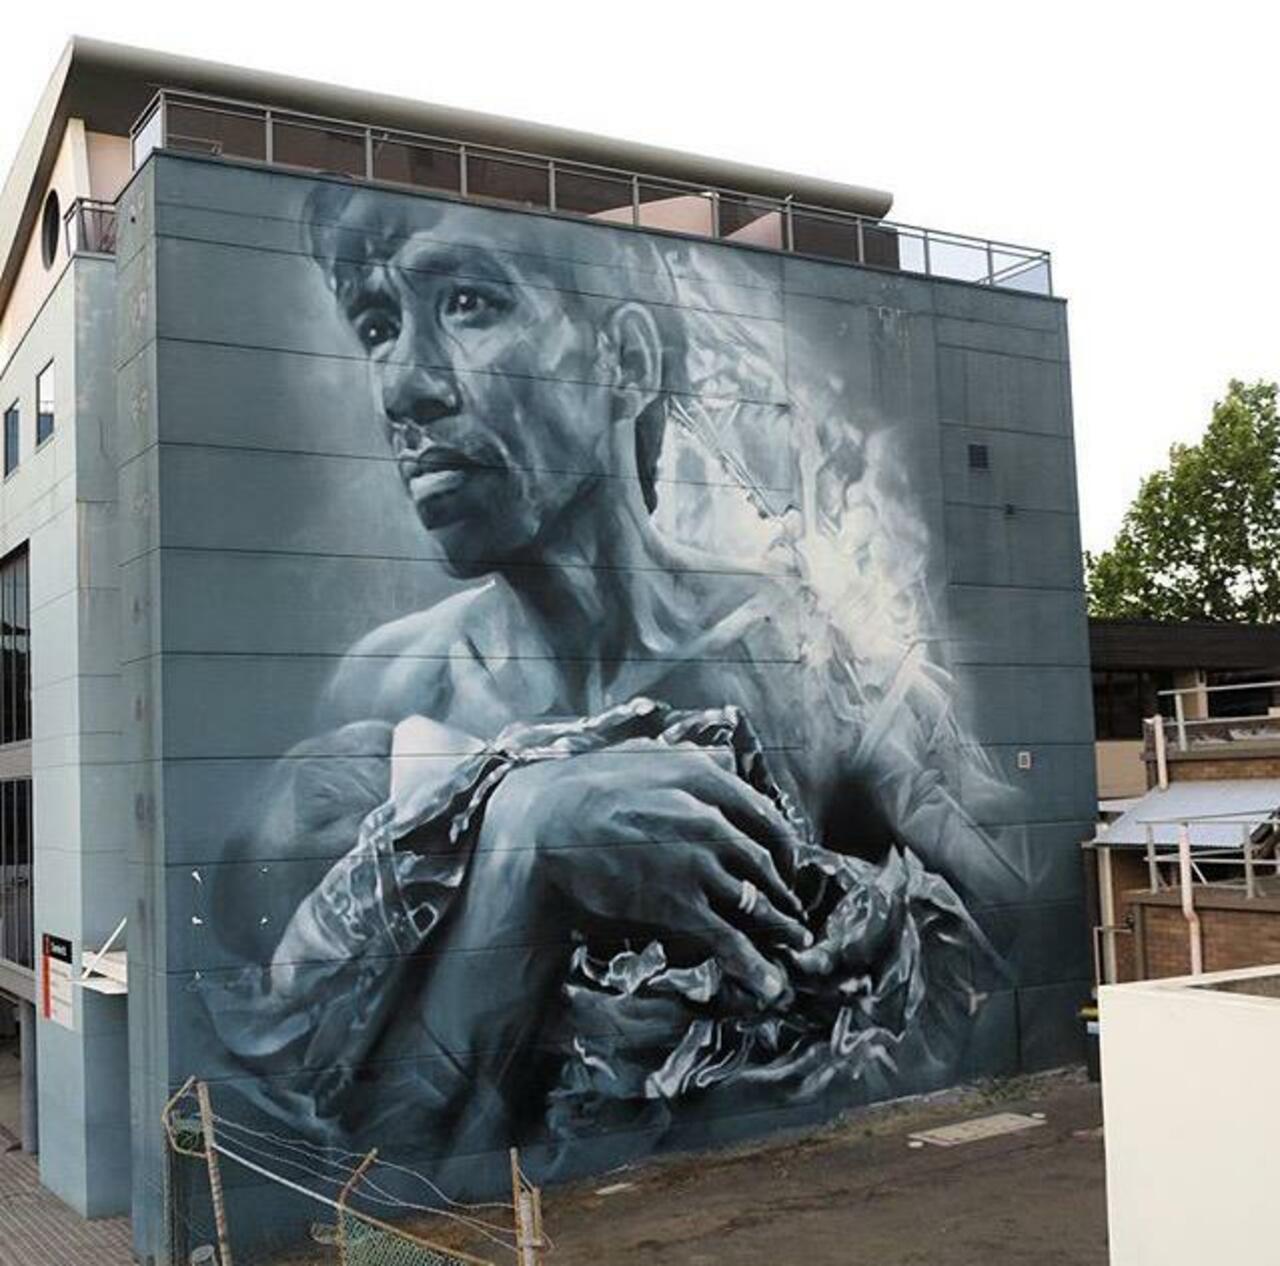 New Street Art by Guido Van Helten in Wollongong Australia 

#art #graffiti #mural #streetart http://t.co/iLAp7aVh3x